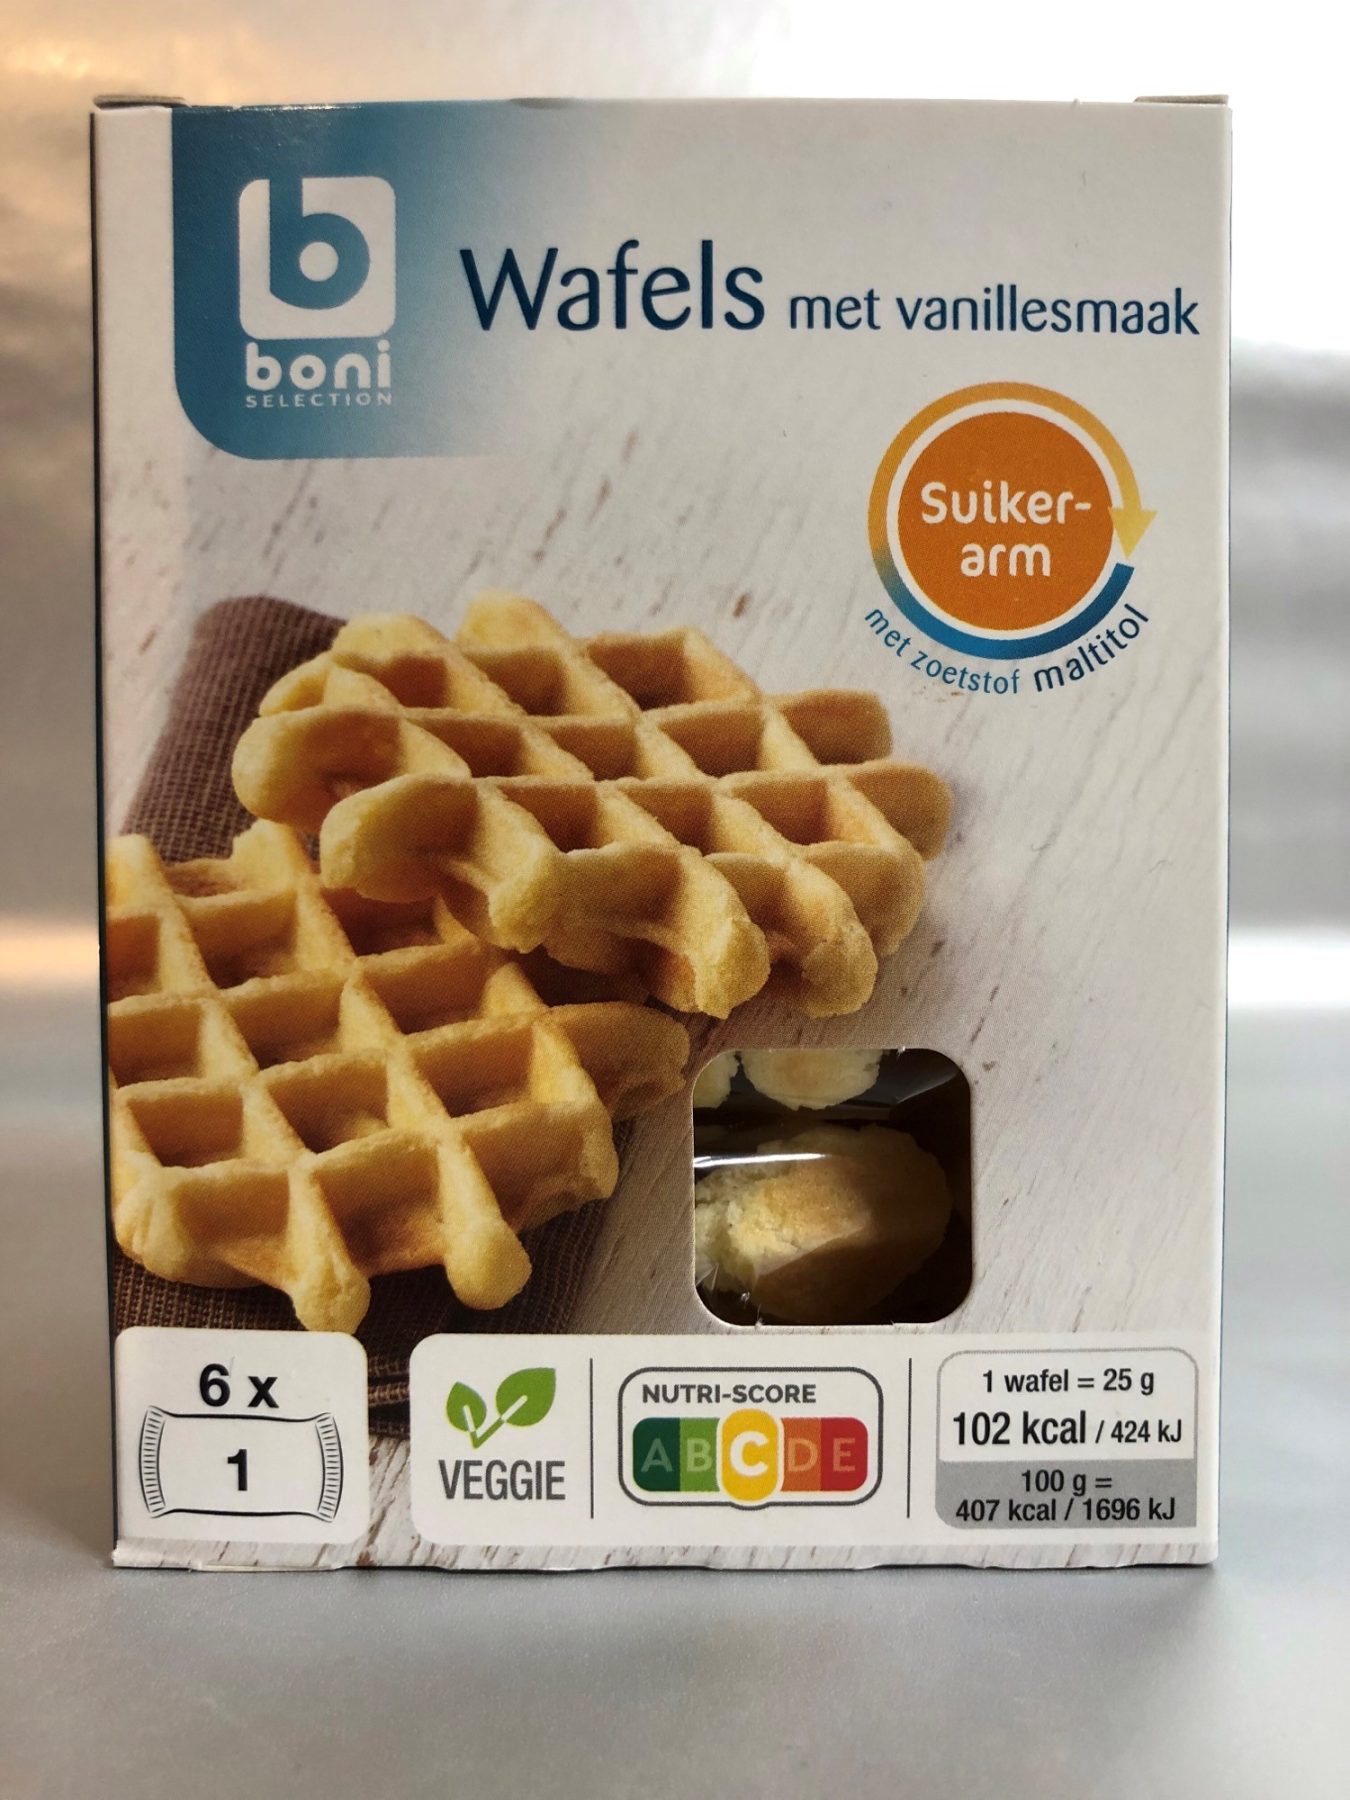 Boni sugar free waffles with vanilla